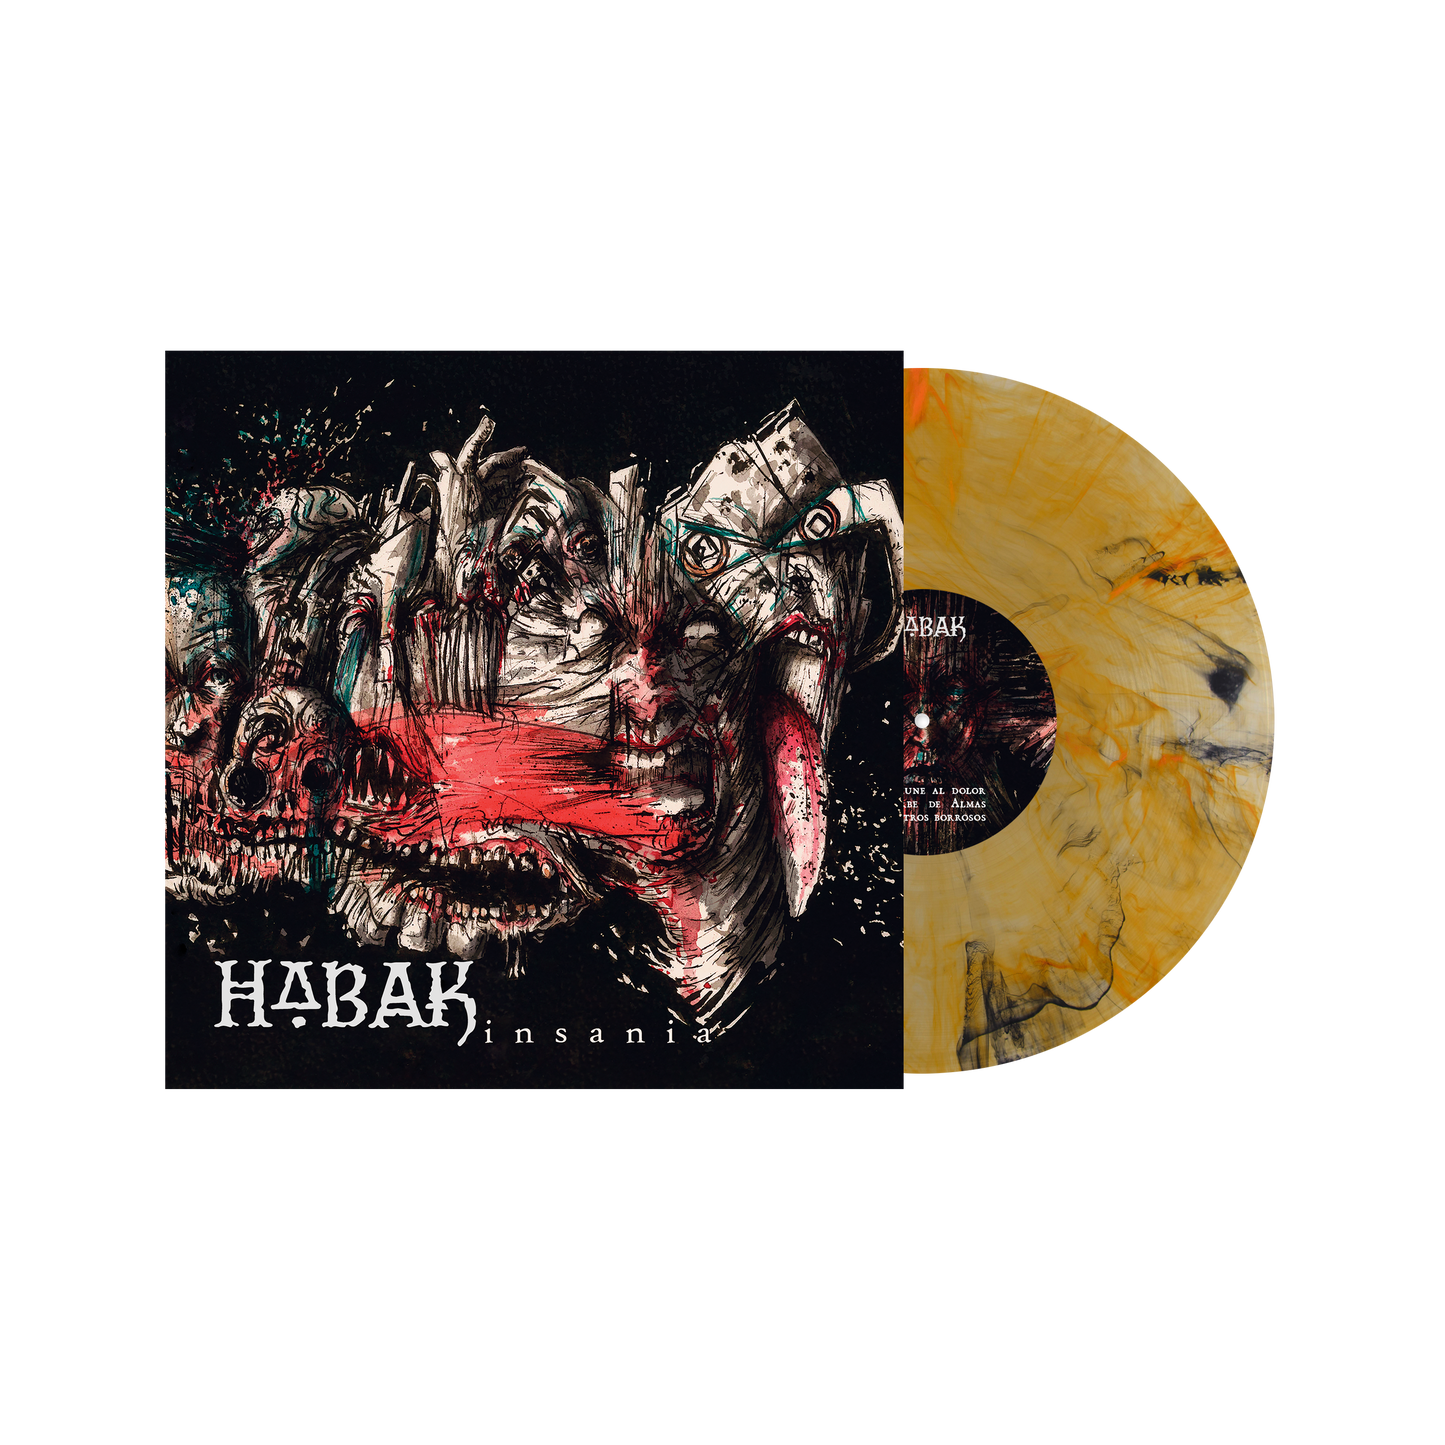 Habak "Insania" LP